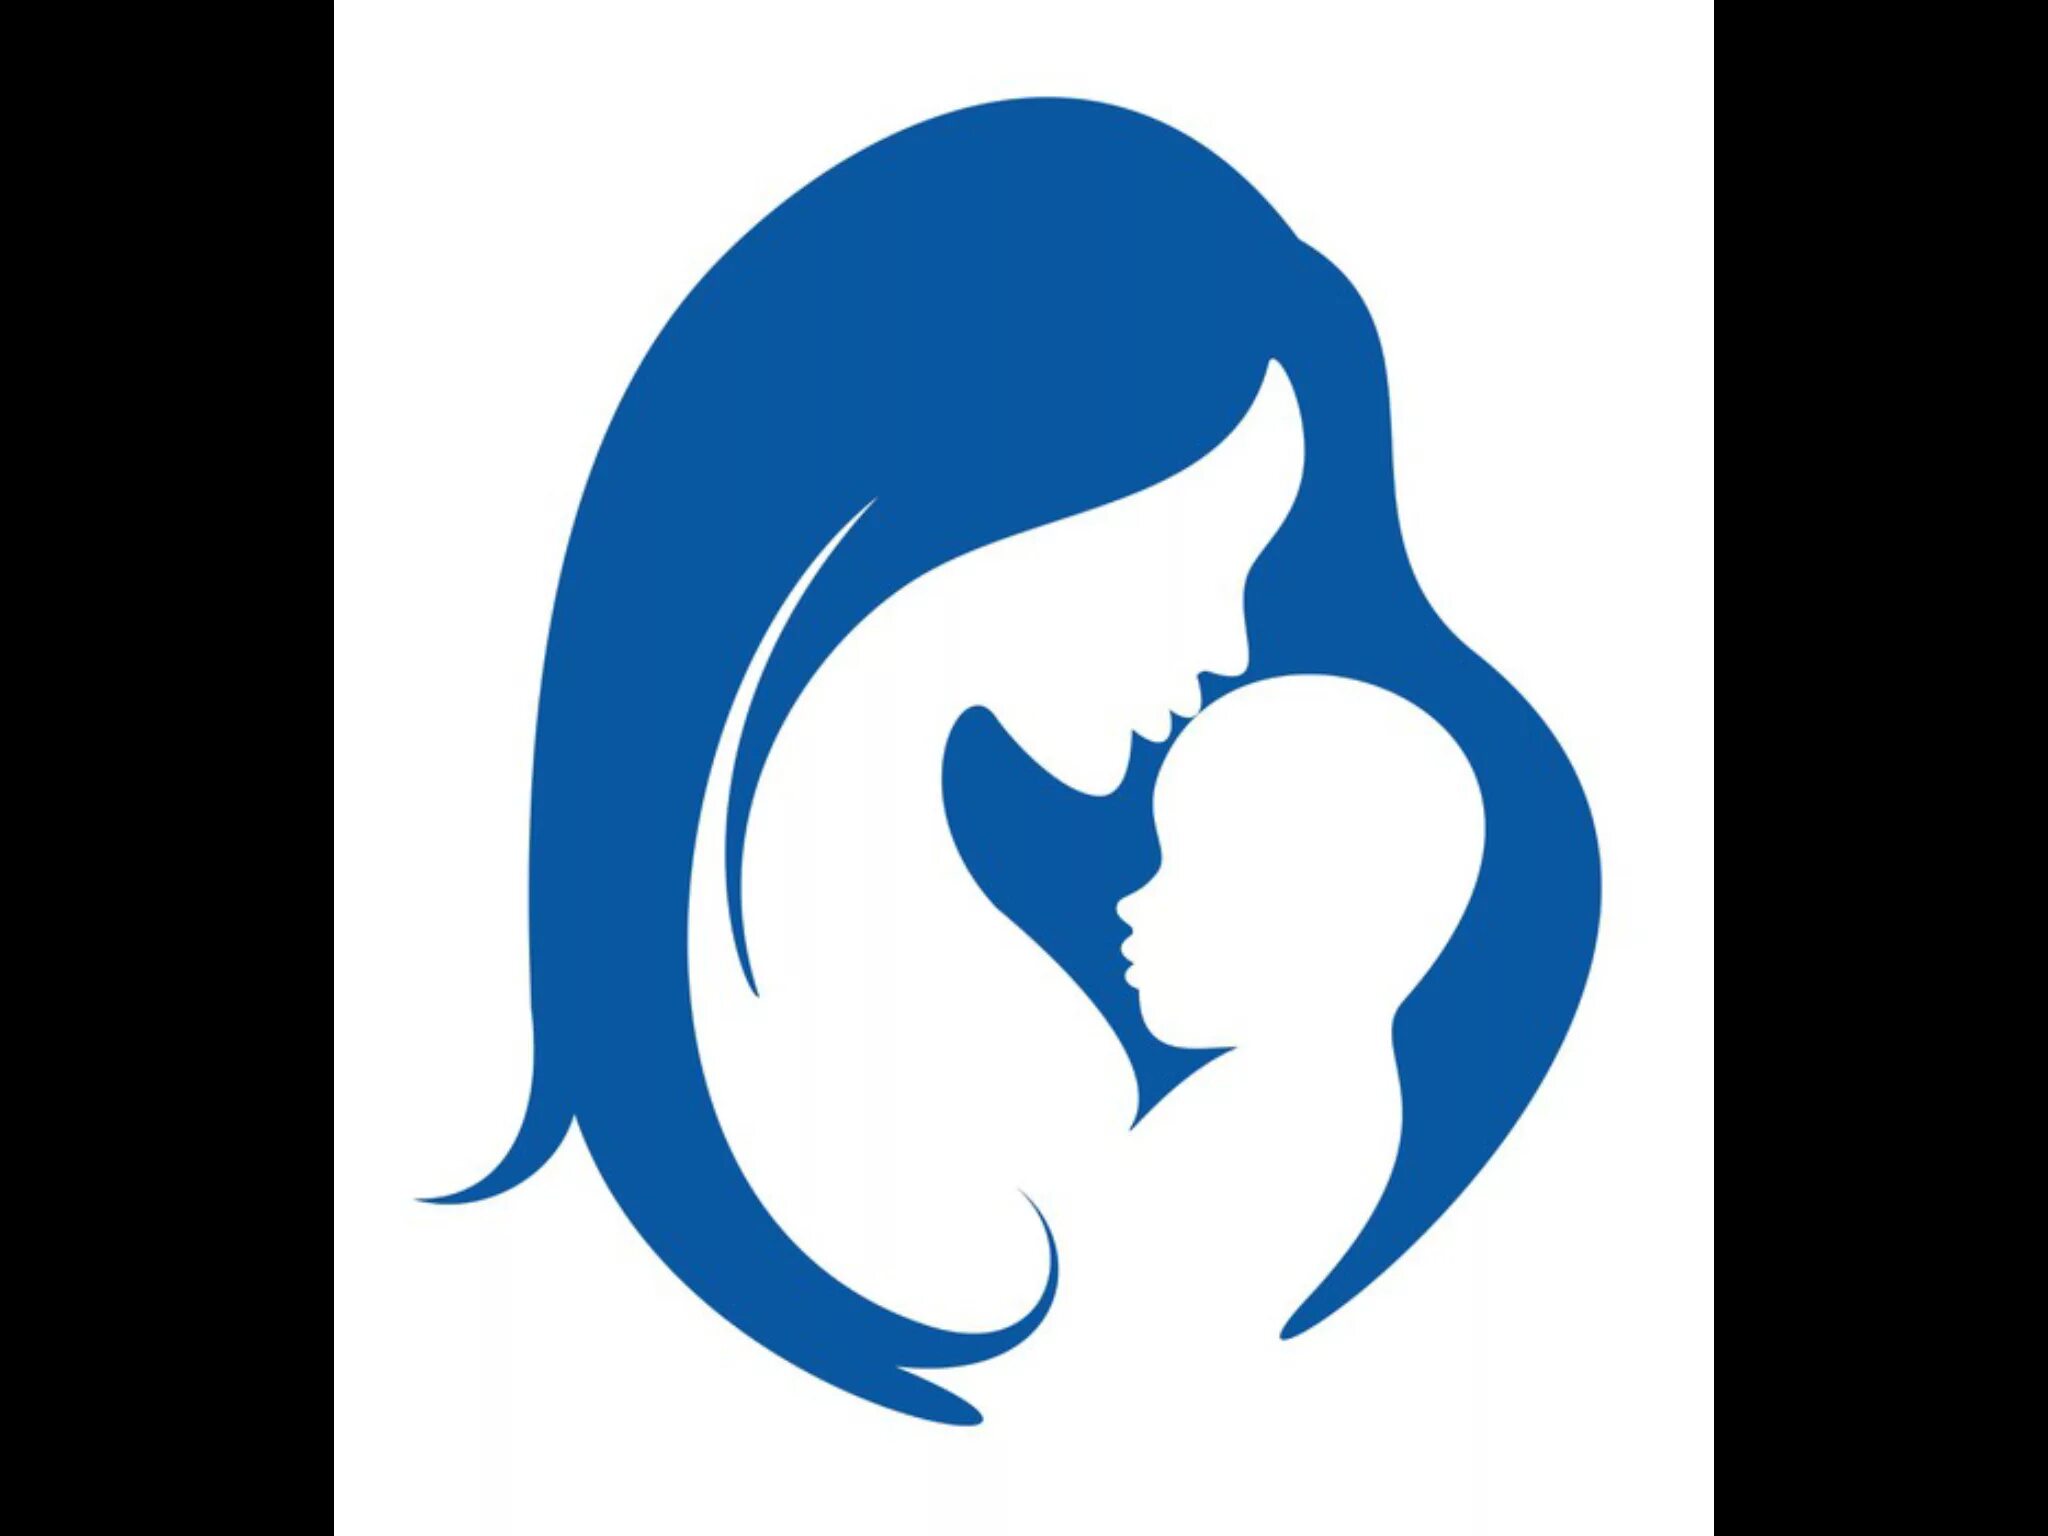 Эмблема матери и ребенка. Мать и ребенок логотип. День матери эмблема. Силуэт матери и ребенка.